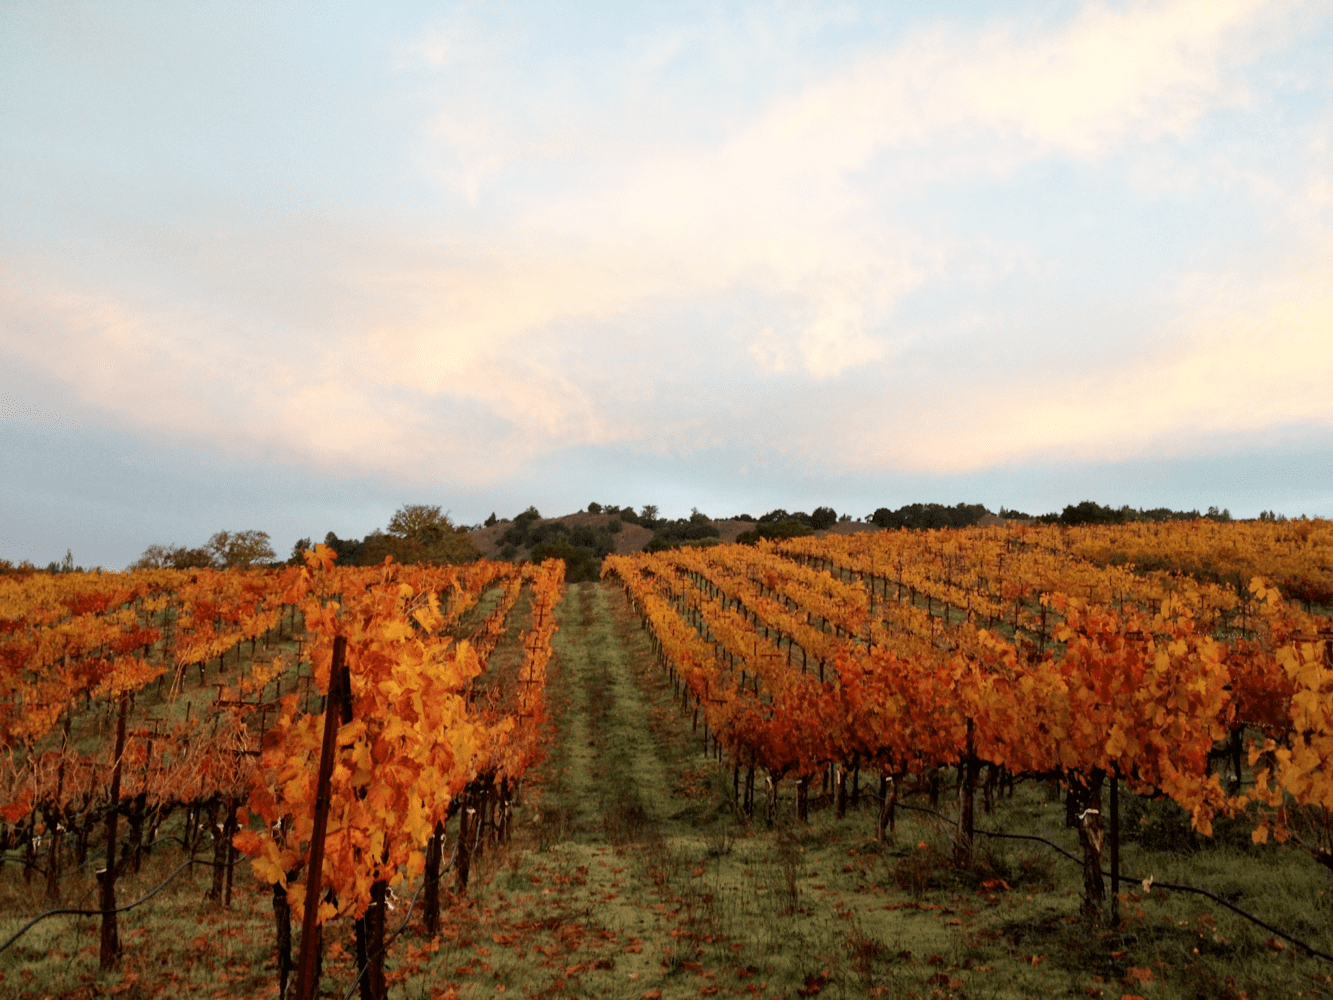 Fall leaves in the vineyard